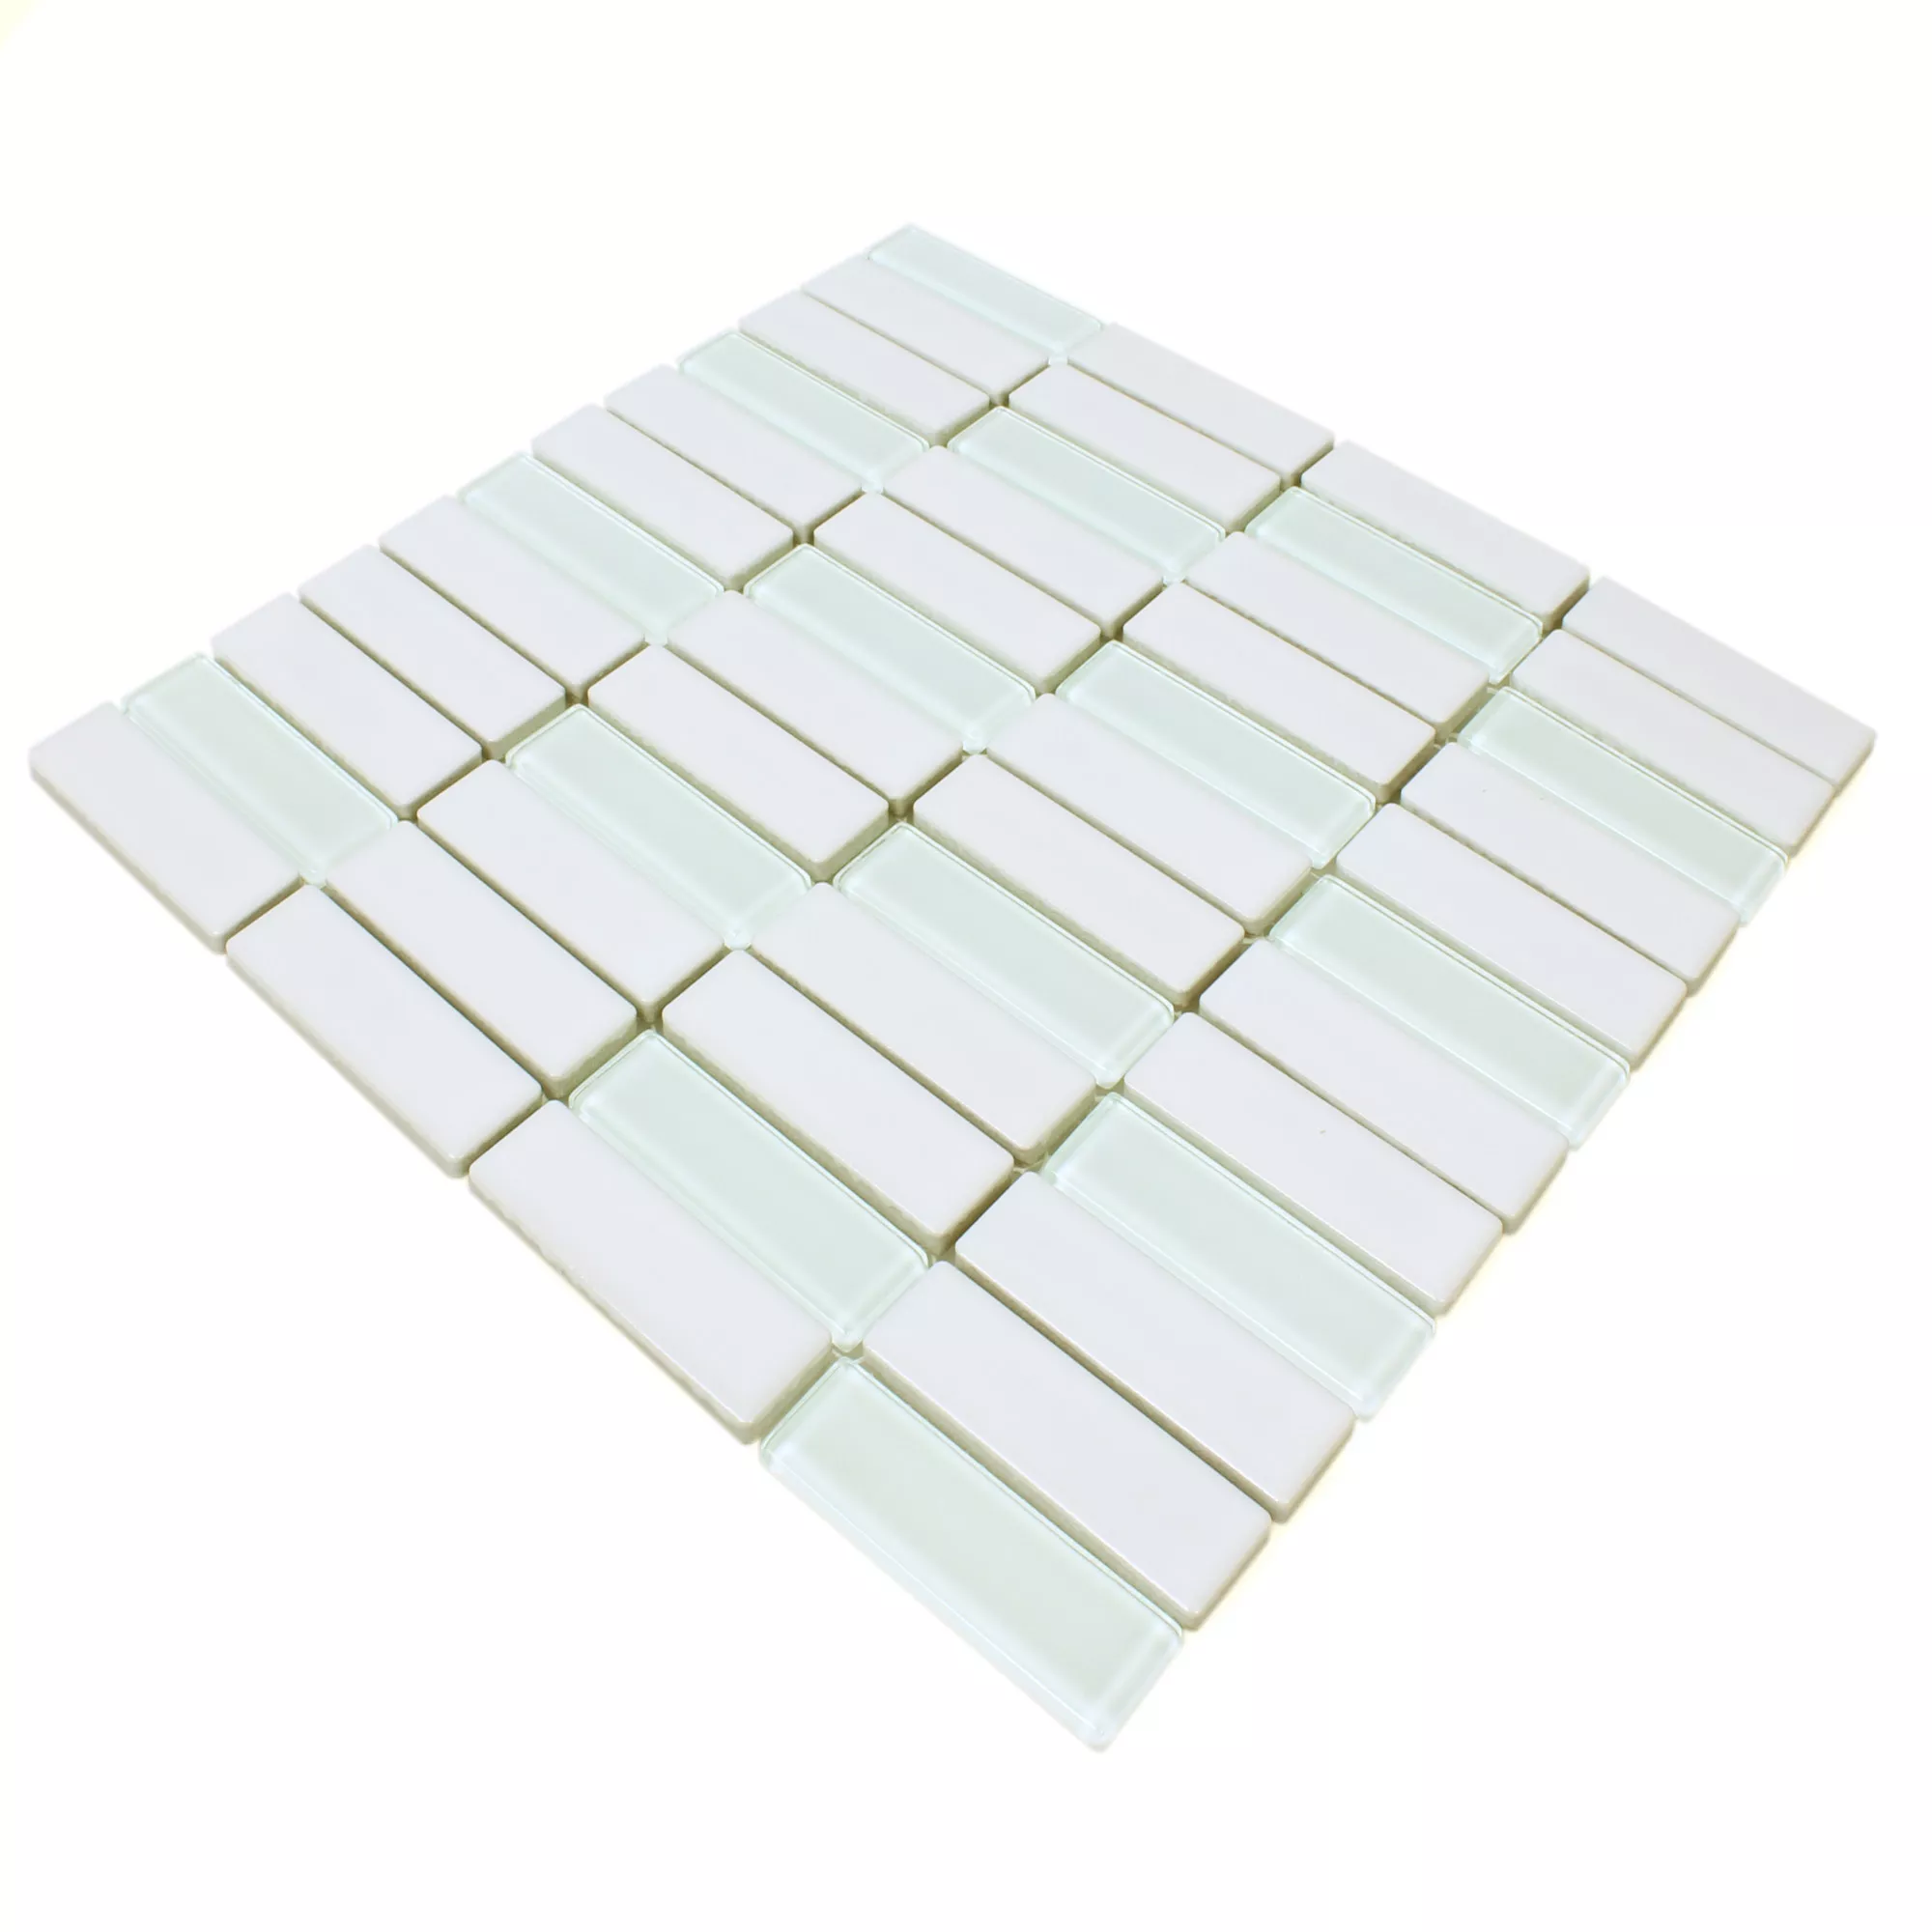 Sample Ceramic Glass Mosaic Tiles Romana White Glossy